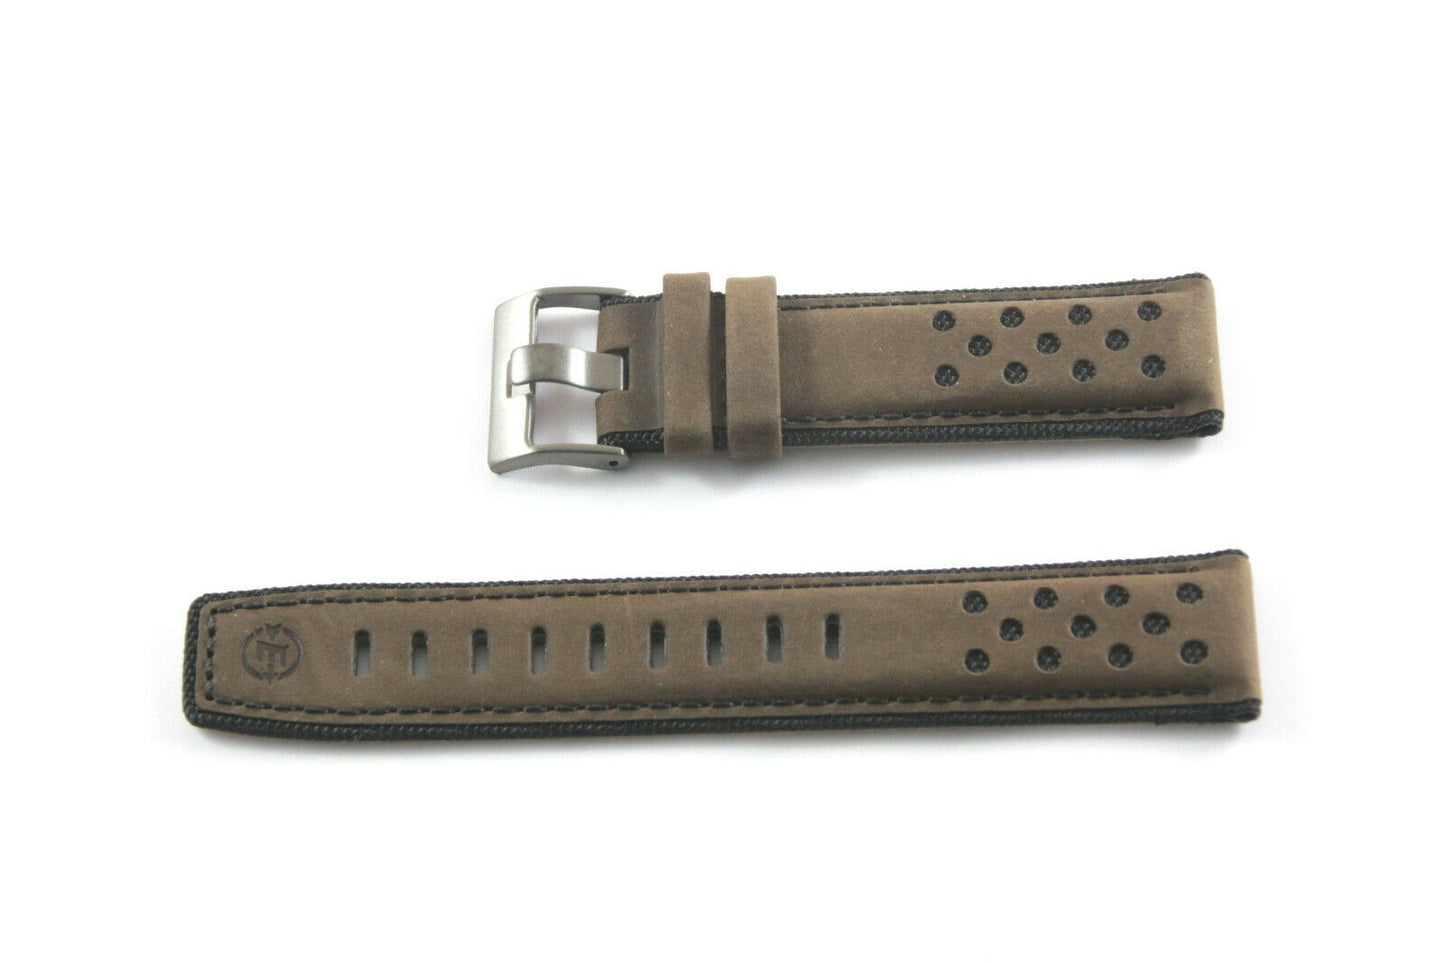 Timex Ersatzarmband TW4B01600 Expedition Indiglo Ersatzband 22mm multifit Leder